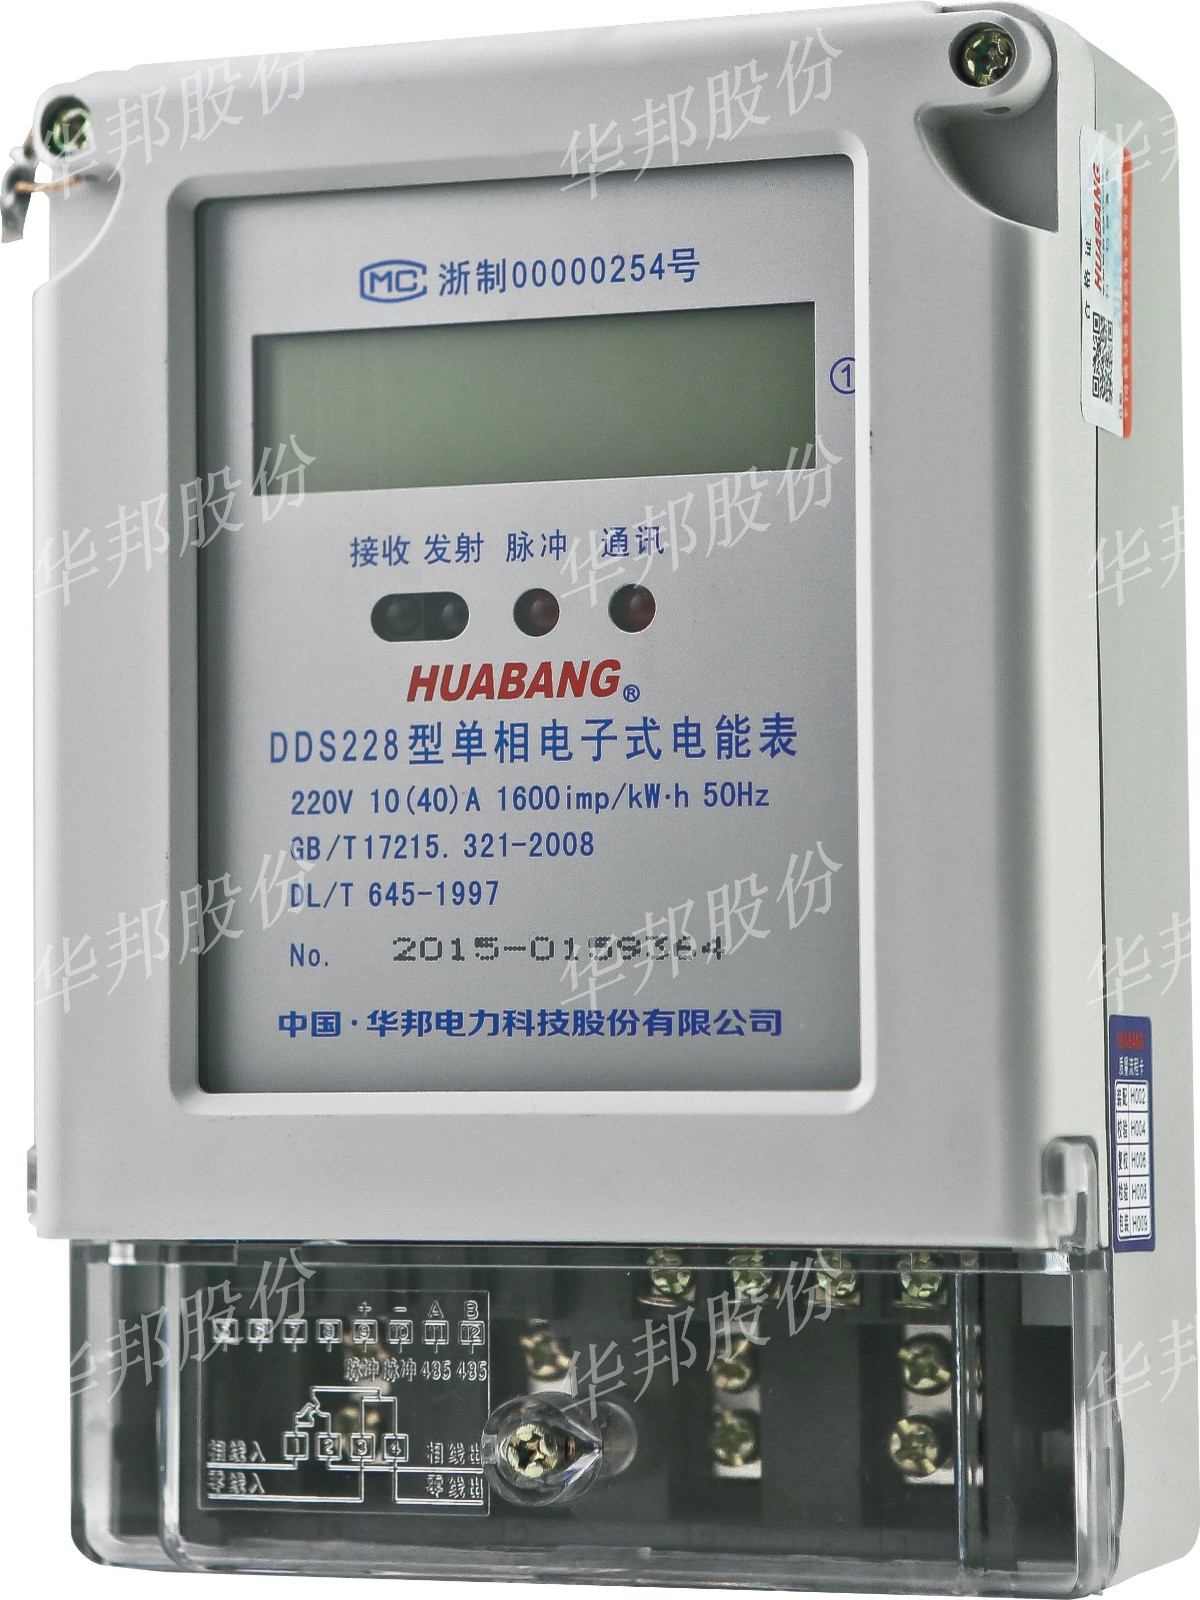 DDS228型单相电子式电能表（带红外通讯RS-485通讯接口）.jpg